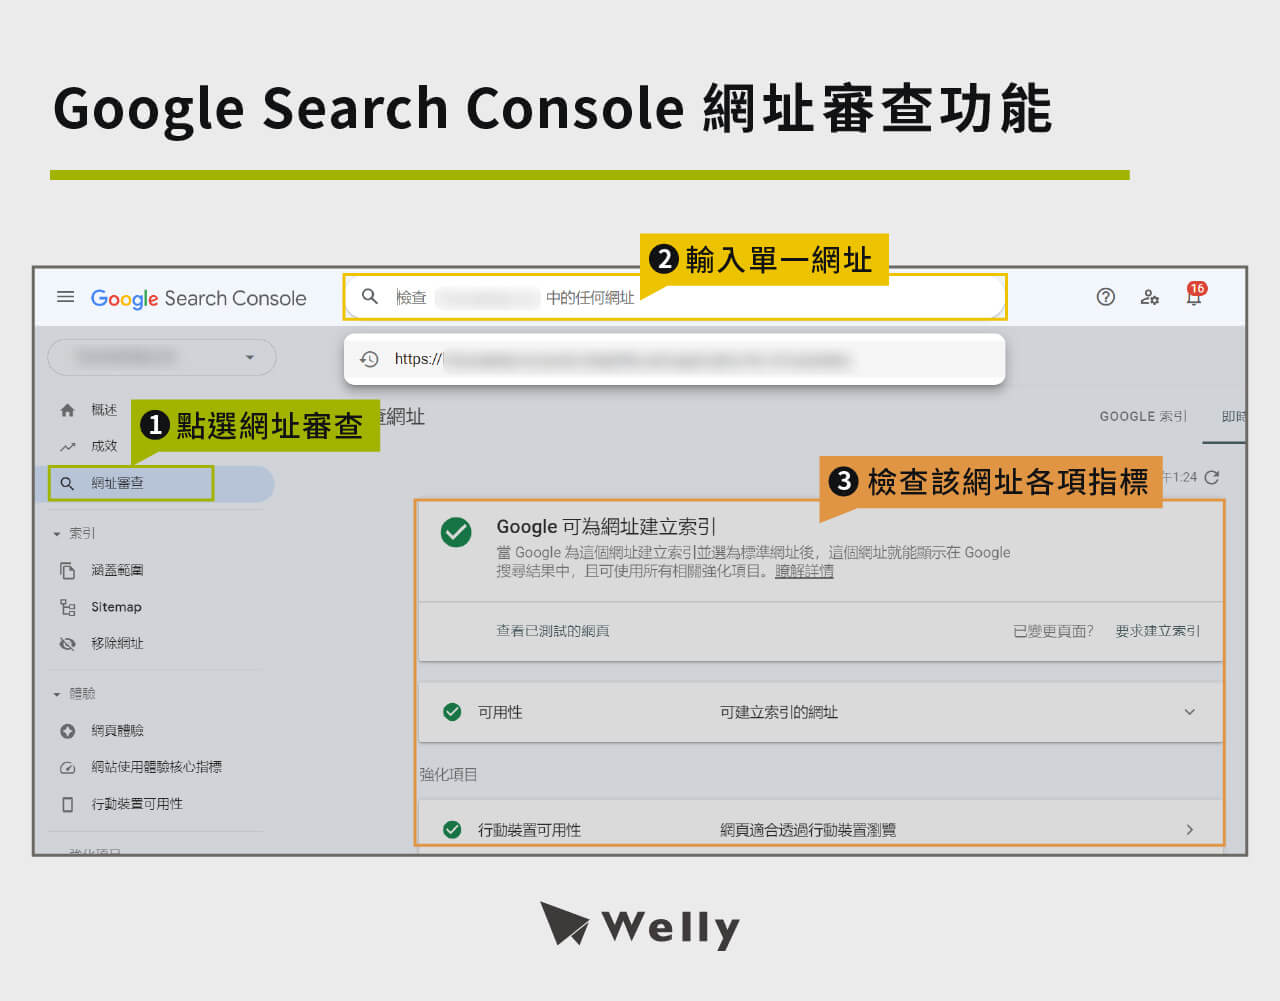 Google Search Console 網址審查功能